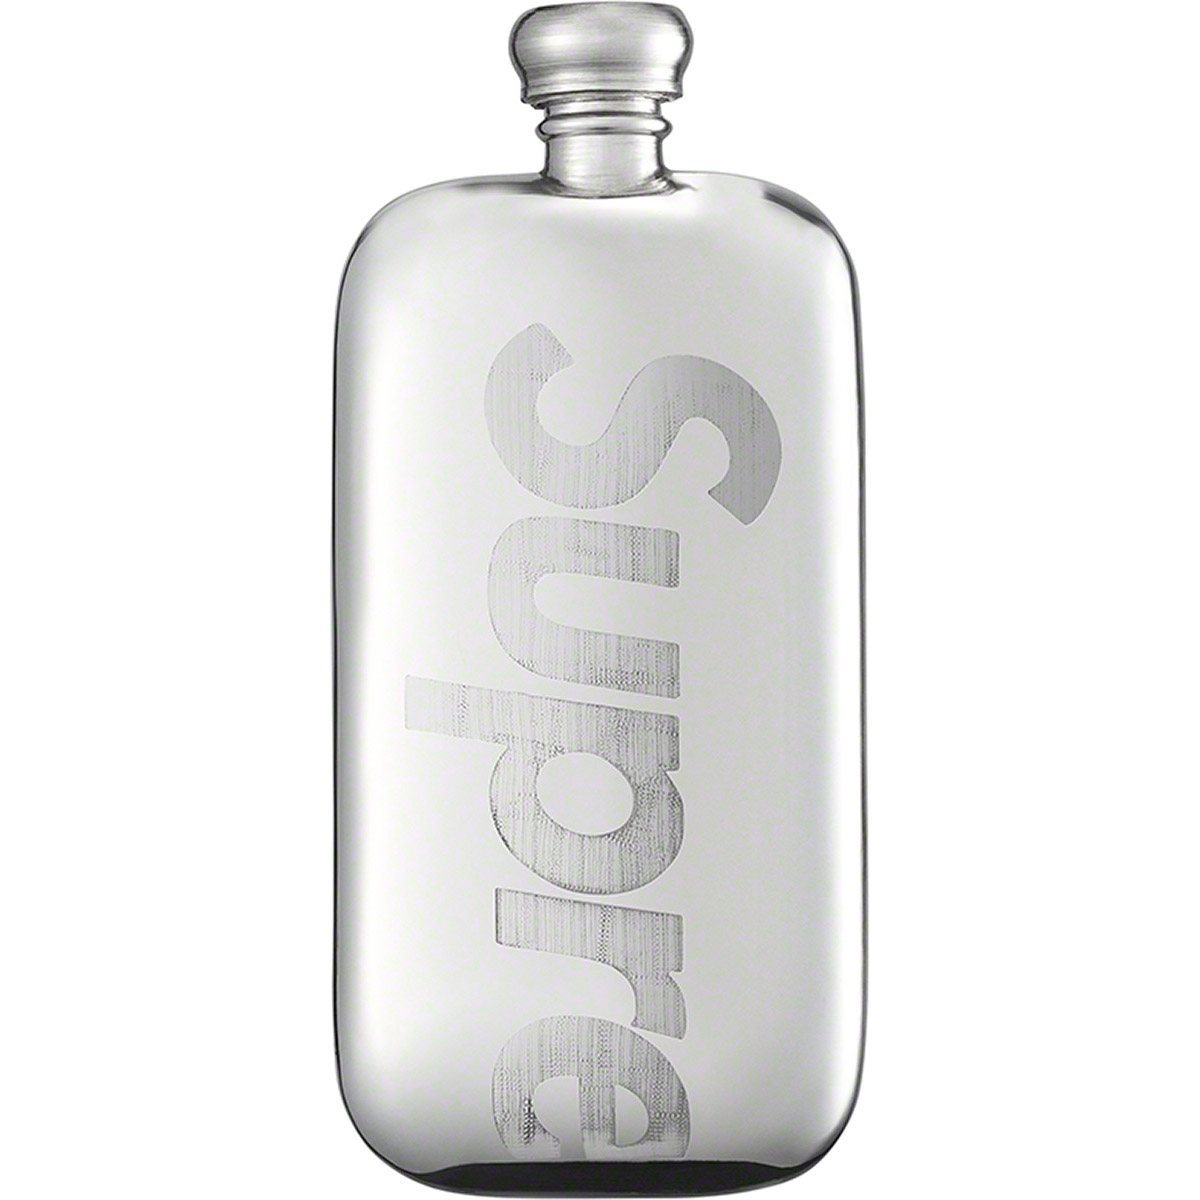 Supreme 3 oz. Pewter Flask